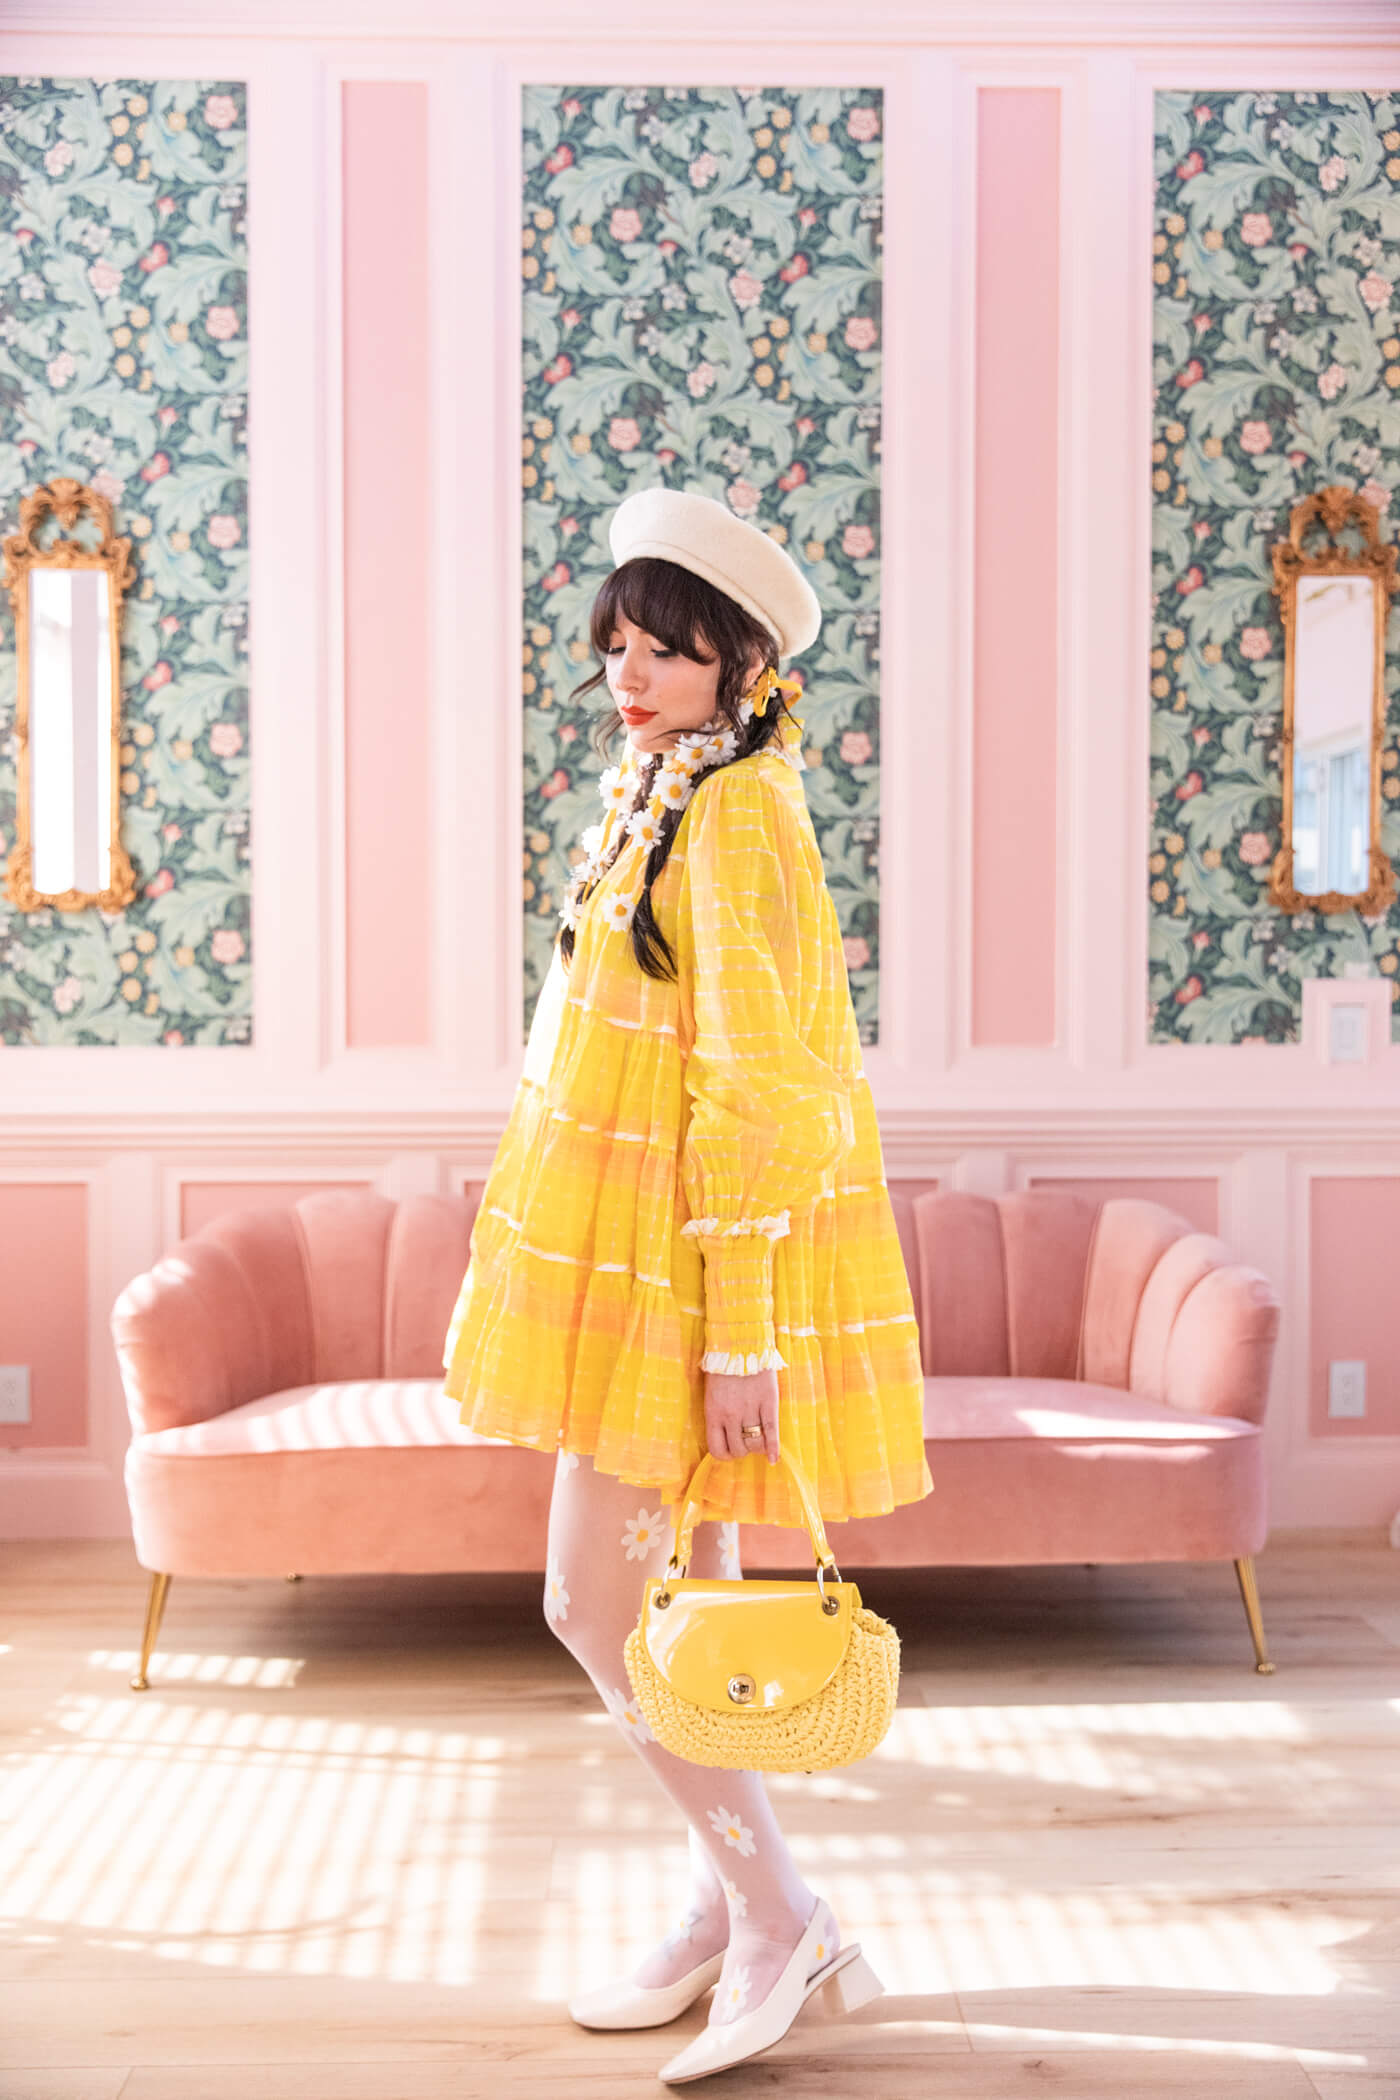 The perfect yellow dress, keiko lynn